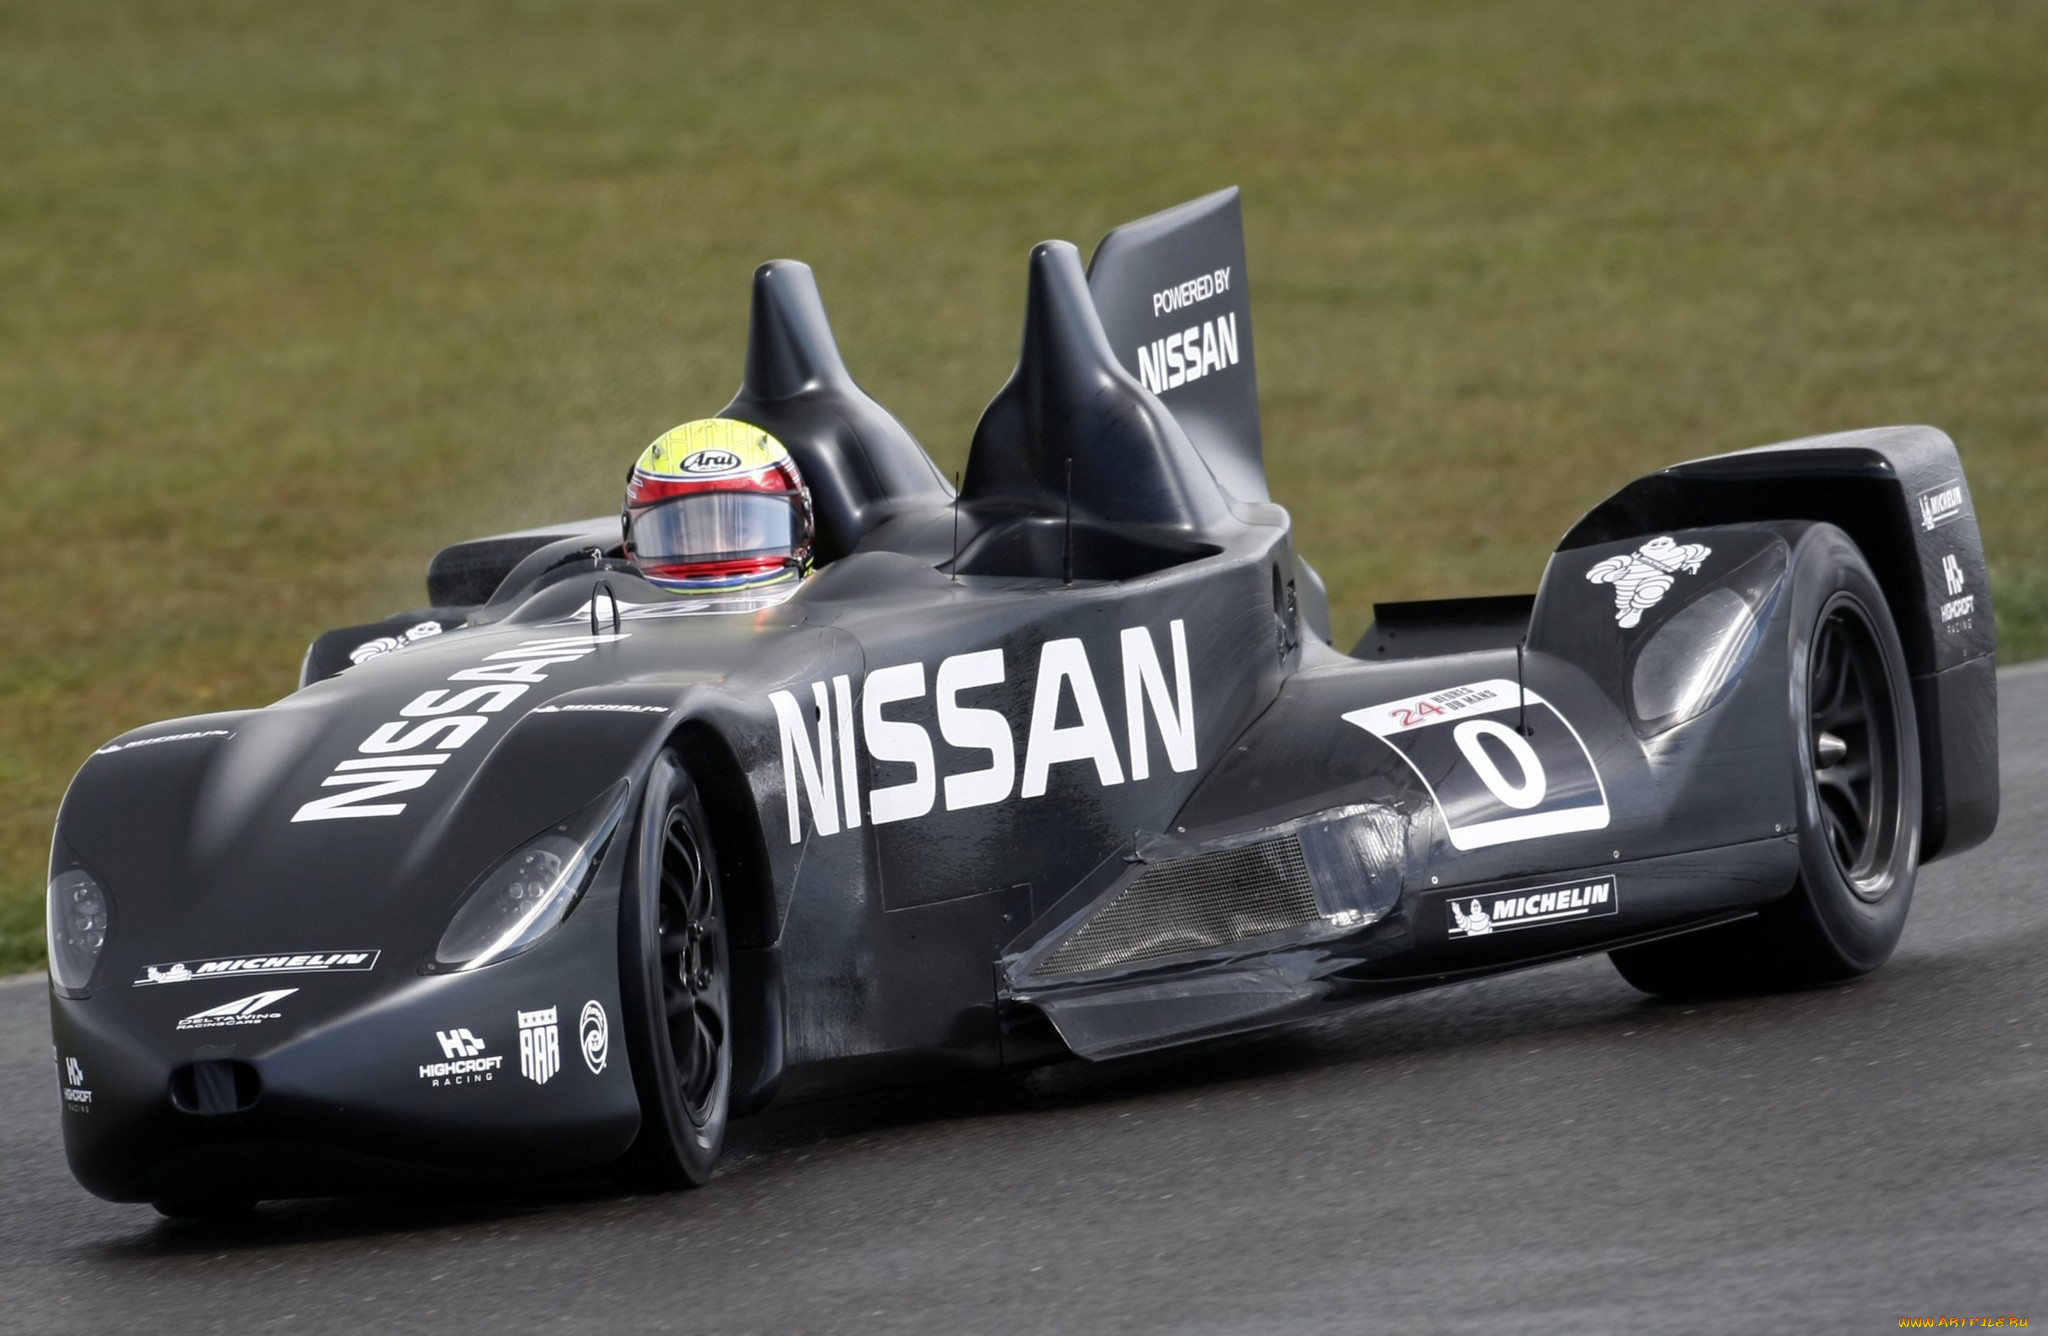 nissan deltawing experimental race car 2012, , nissan, datsun, deltawing, experimental, race, car, 2012